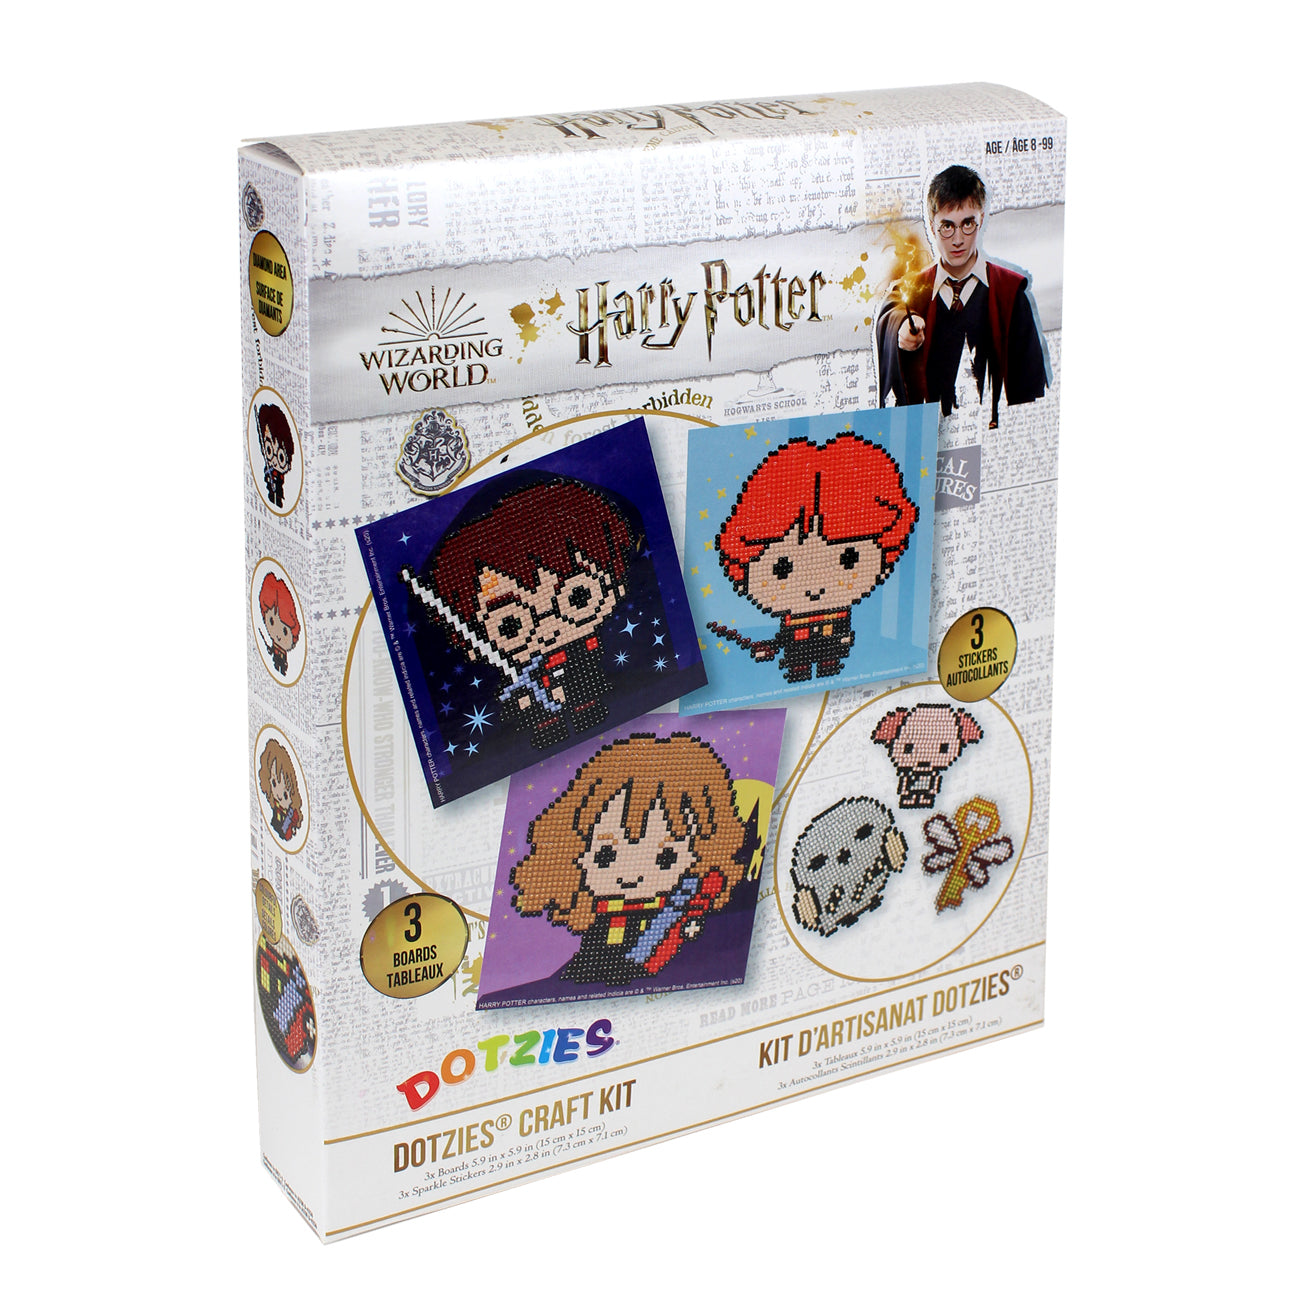 Harry Potter Dotzies Craft Kit